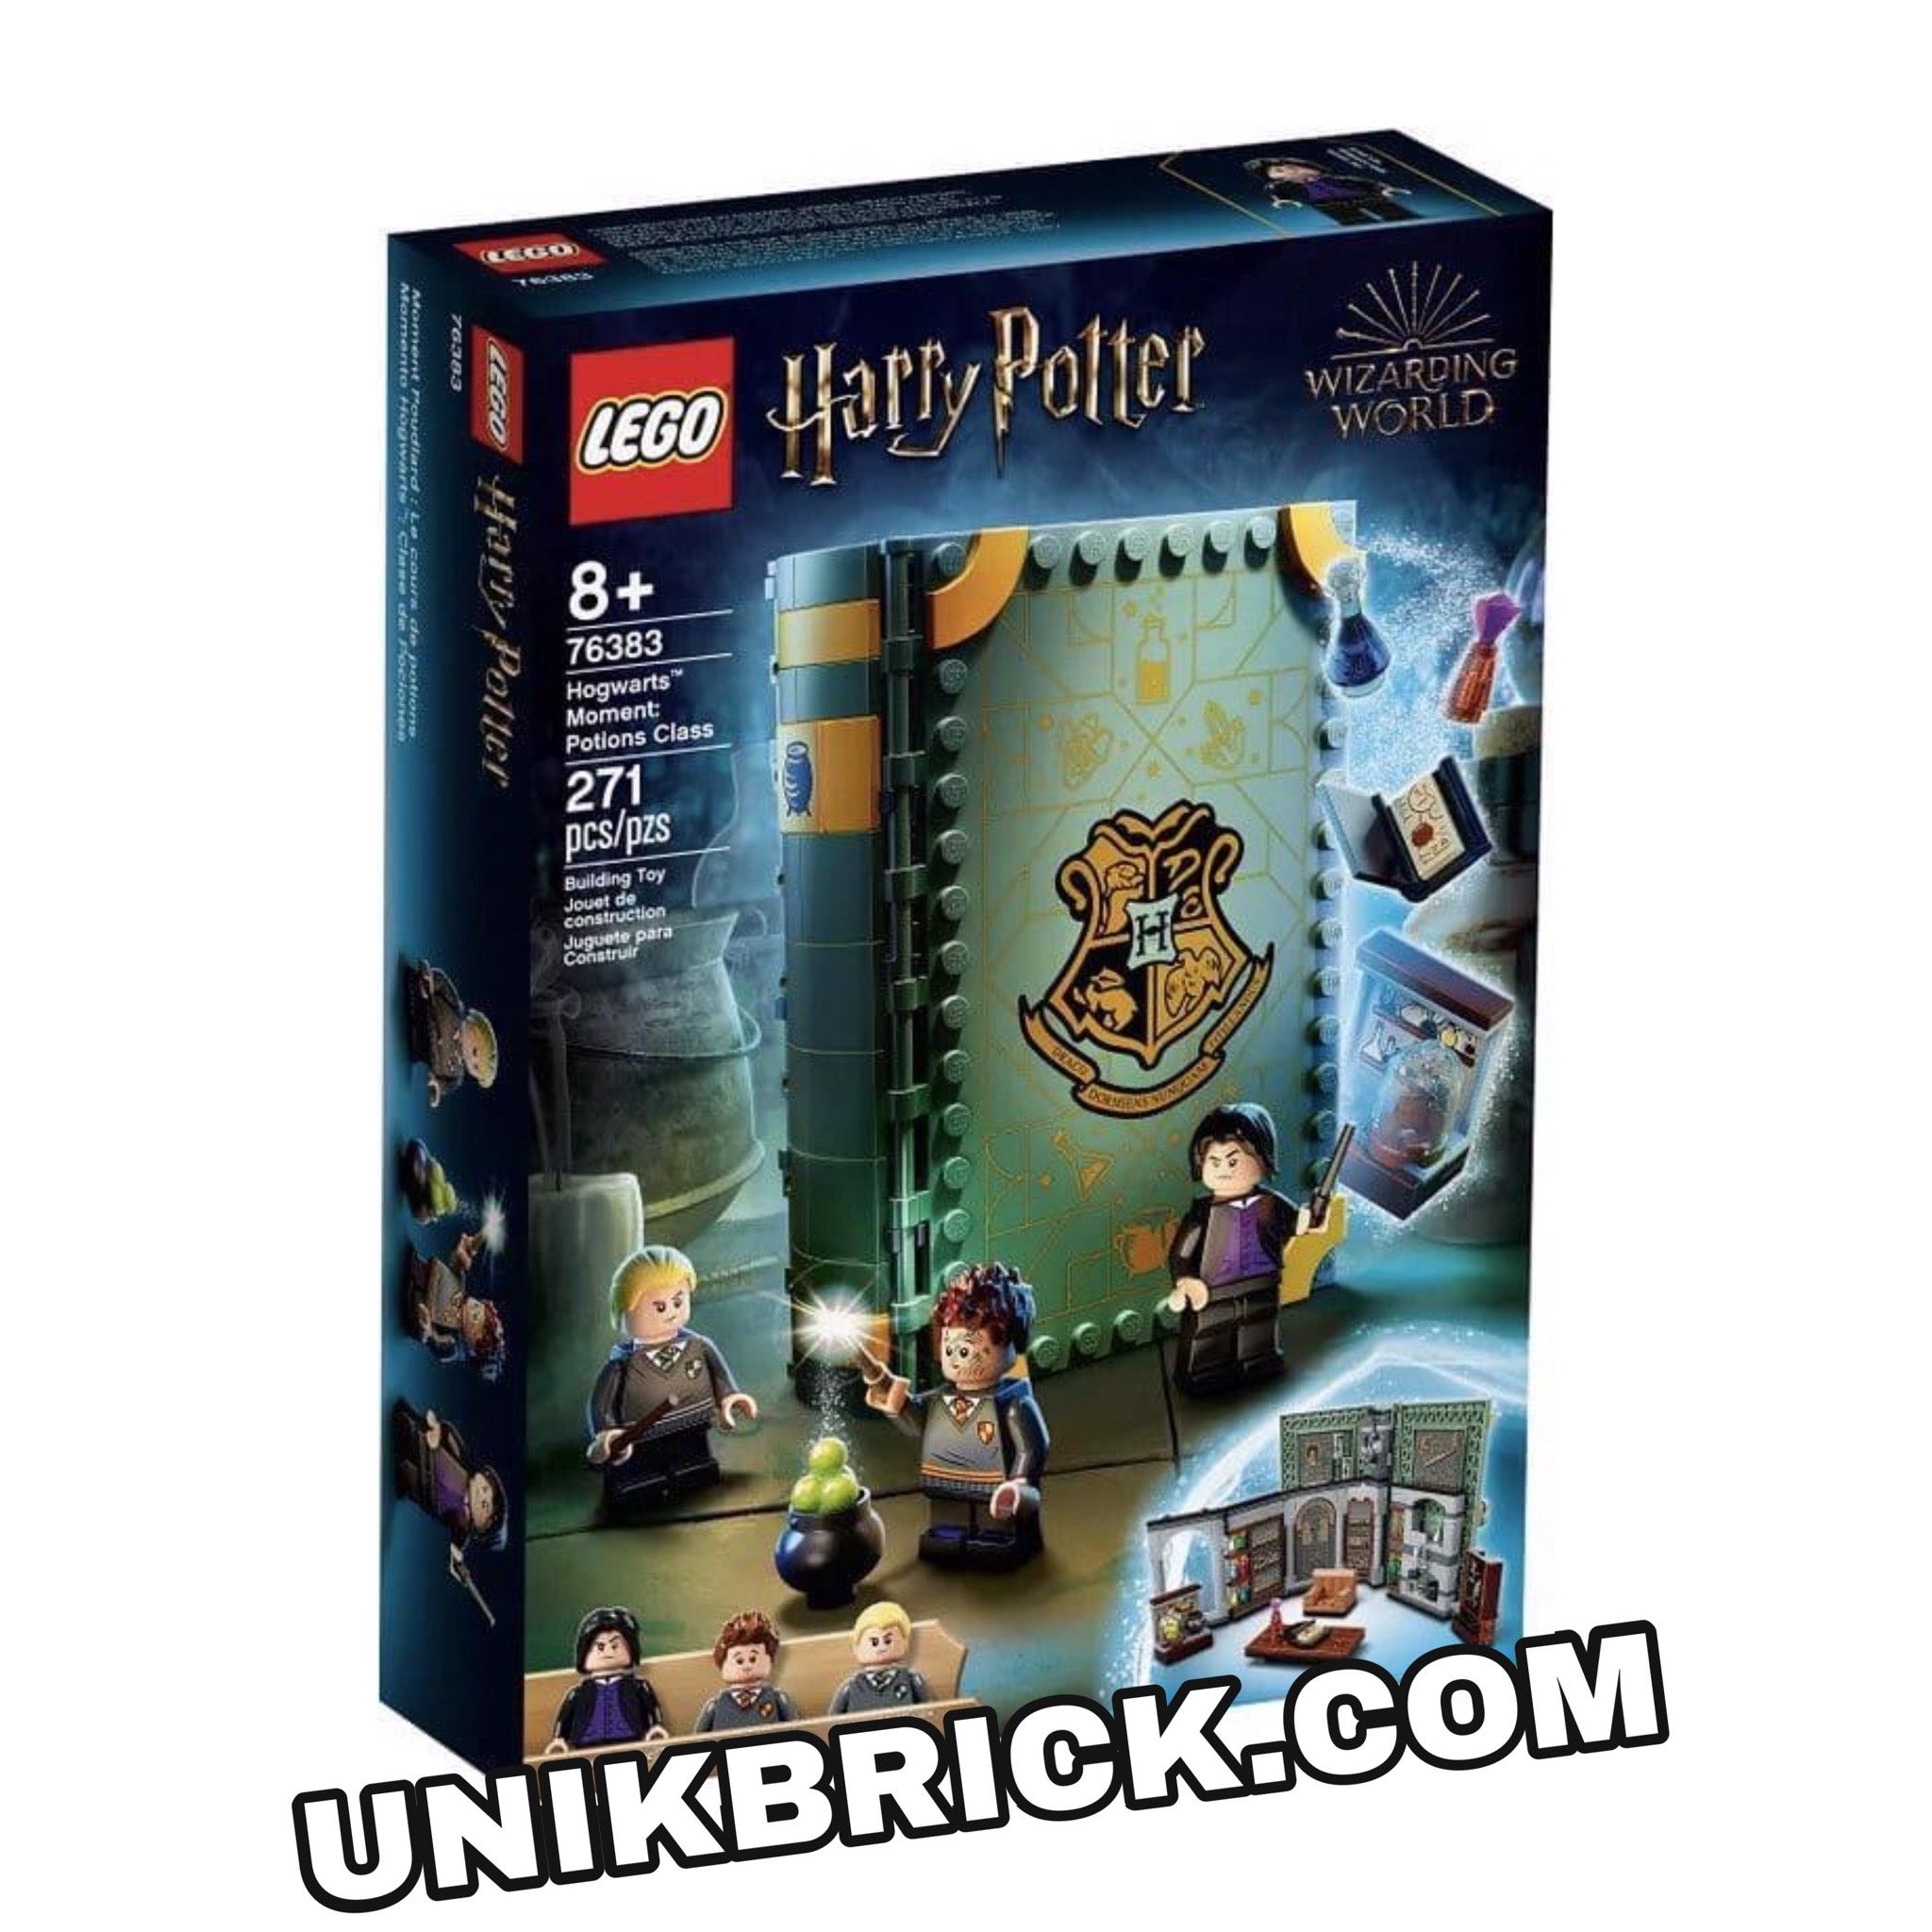 [CÓ HÀNG] LEGO Harry Potter 76383 Hogwarts Moment: Potions Class